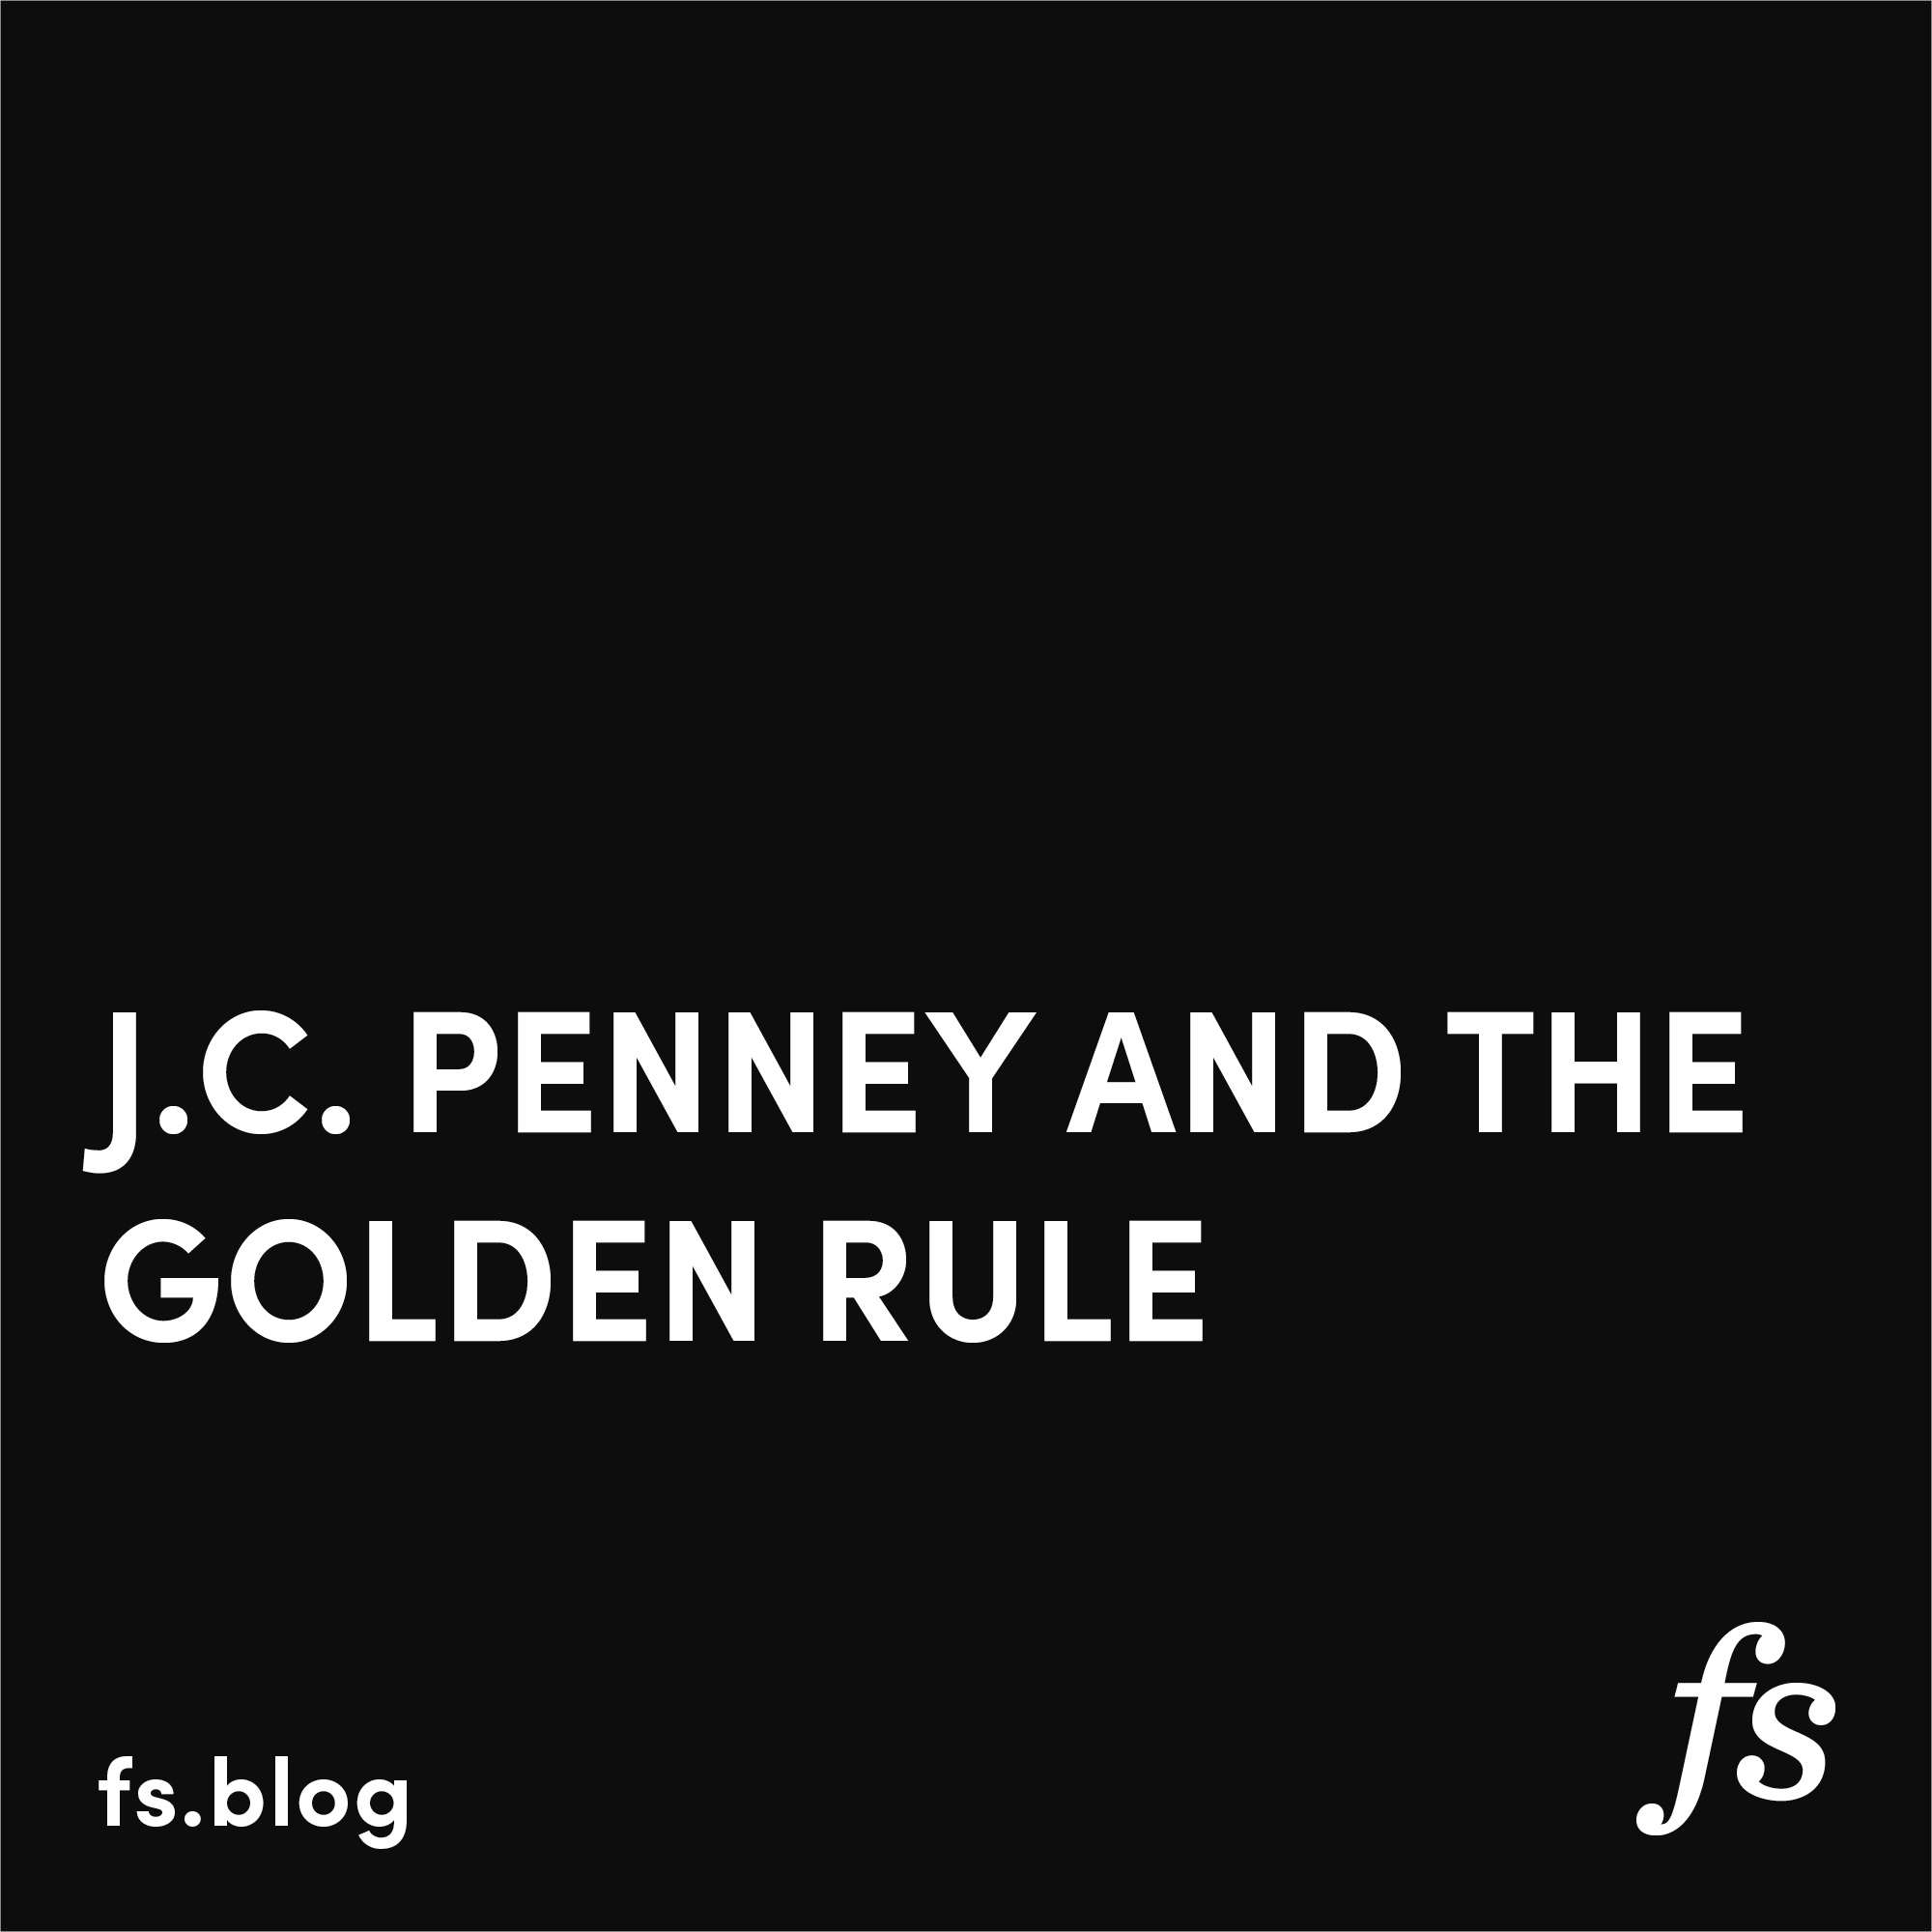 J.C. Penney Biography & Christian Principles